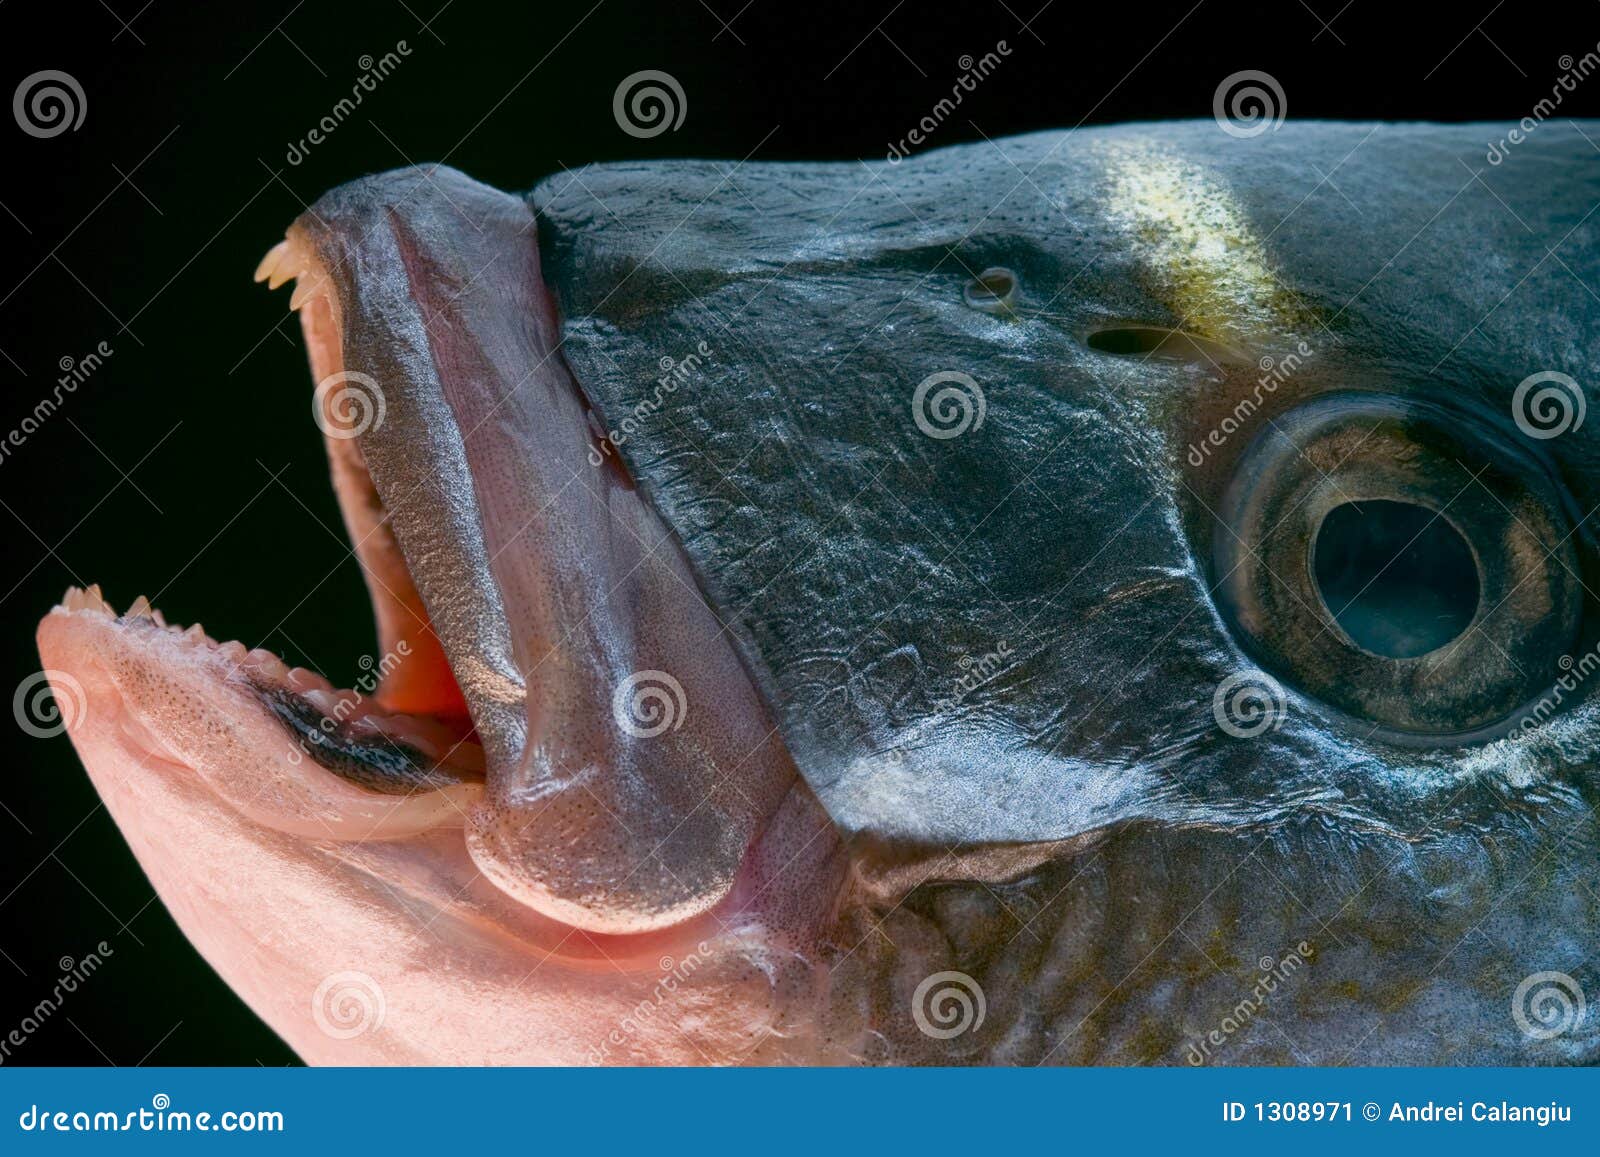 dorada fish head